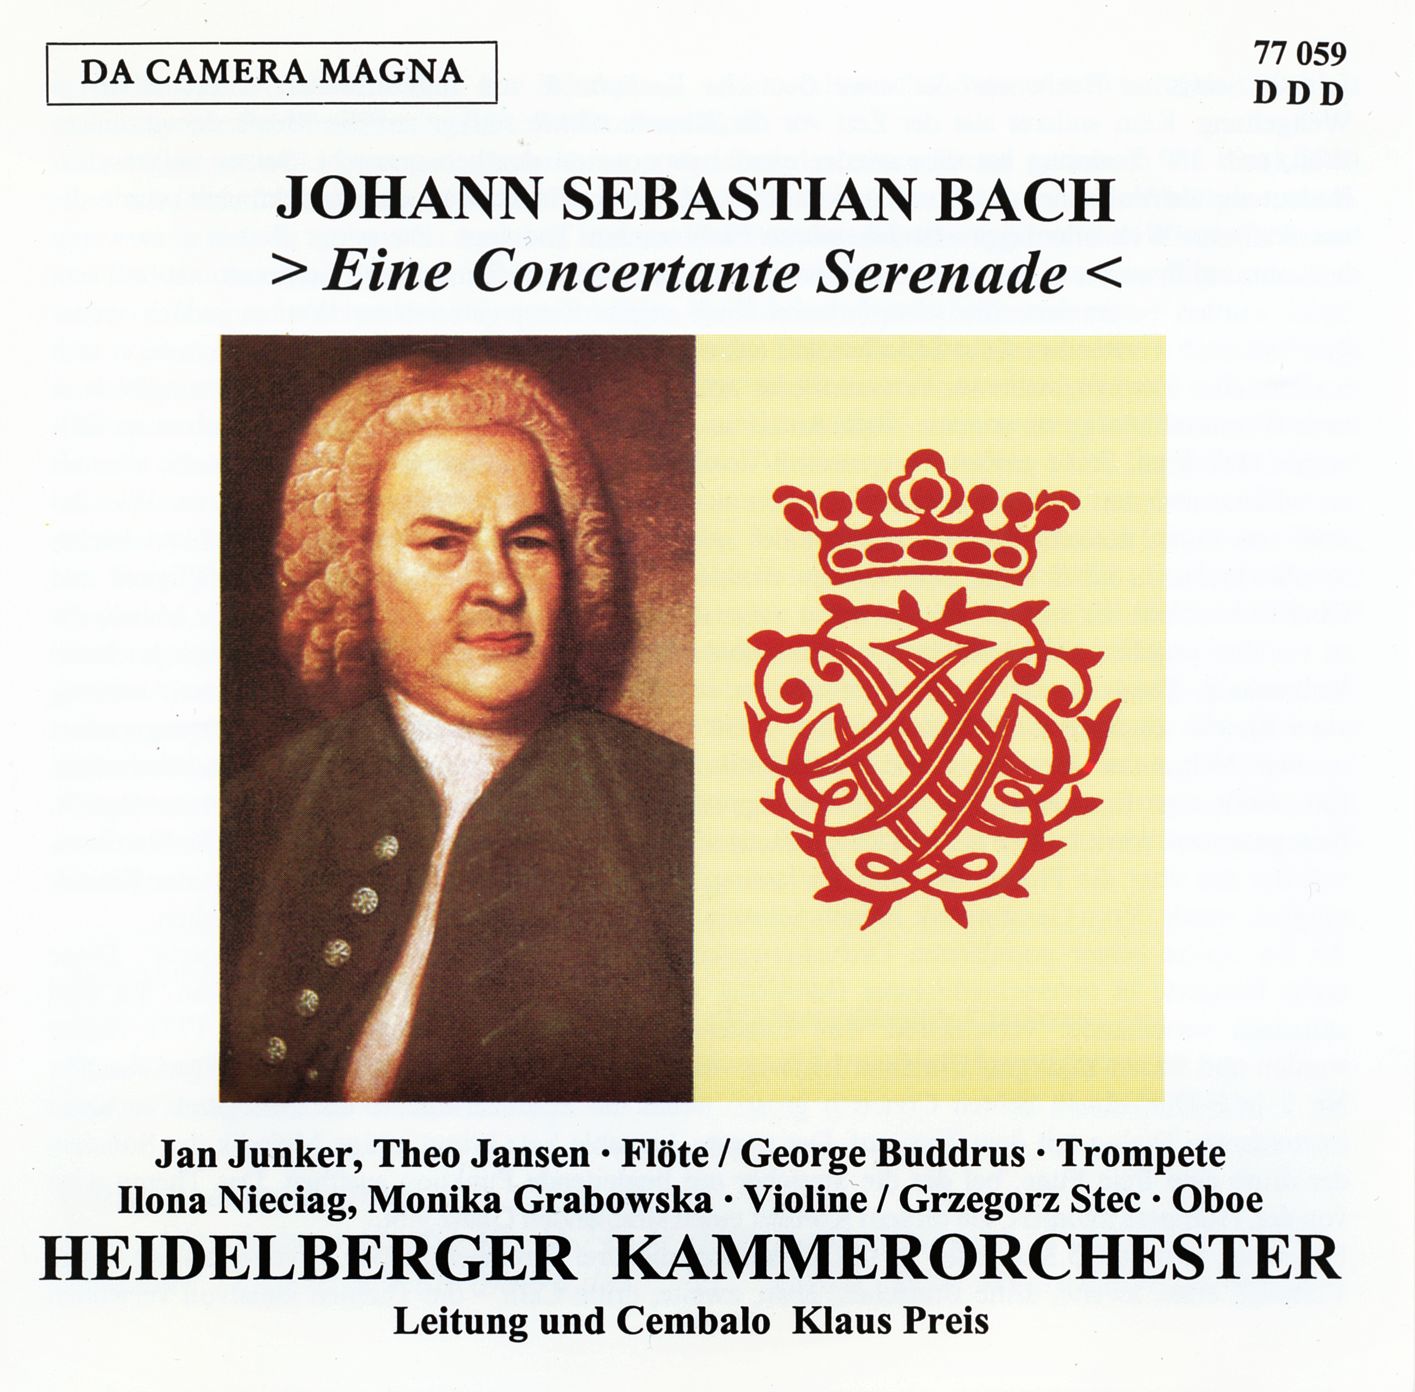 Johann Sebastian Bach - Eine Concertante Serenade